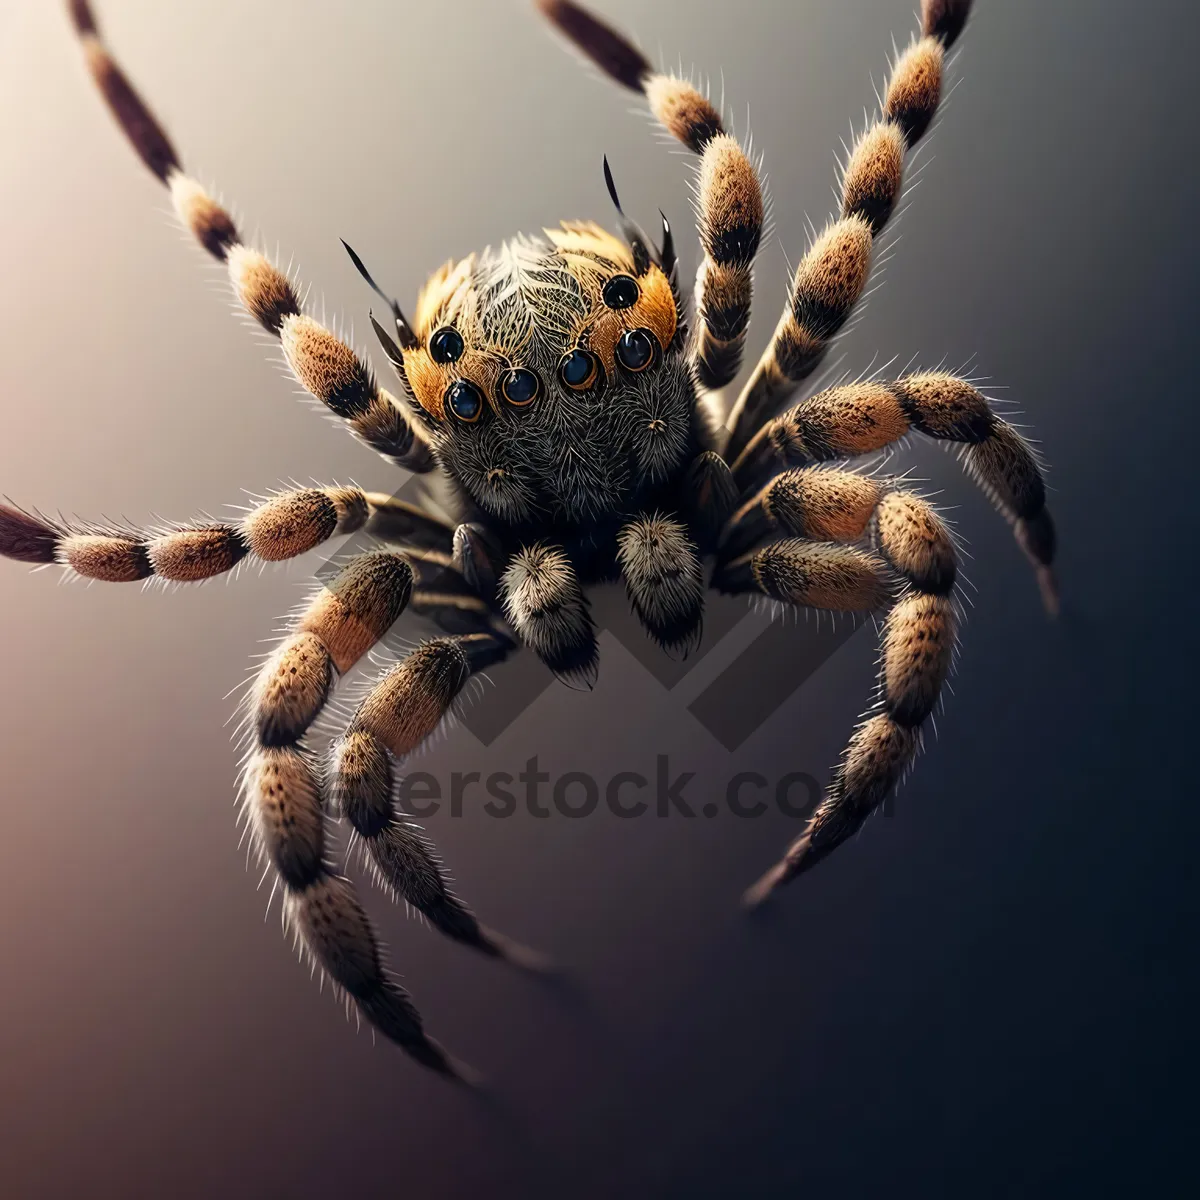 Picture of Creepy Barn Spider, Wildlife Predator, Scary Arachnid